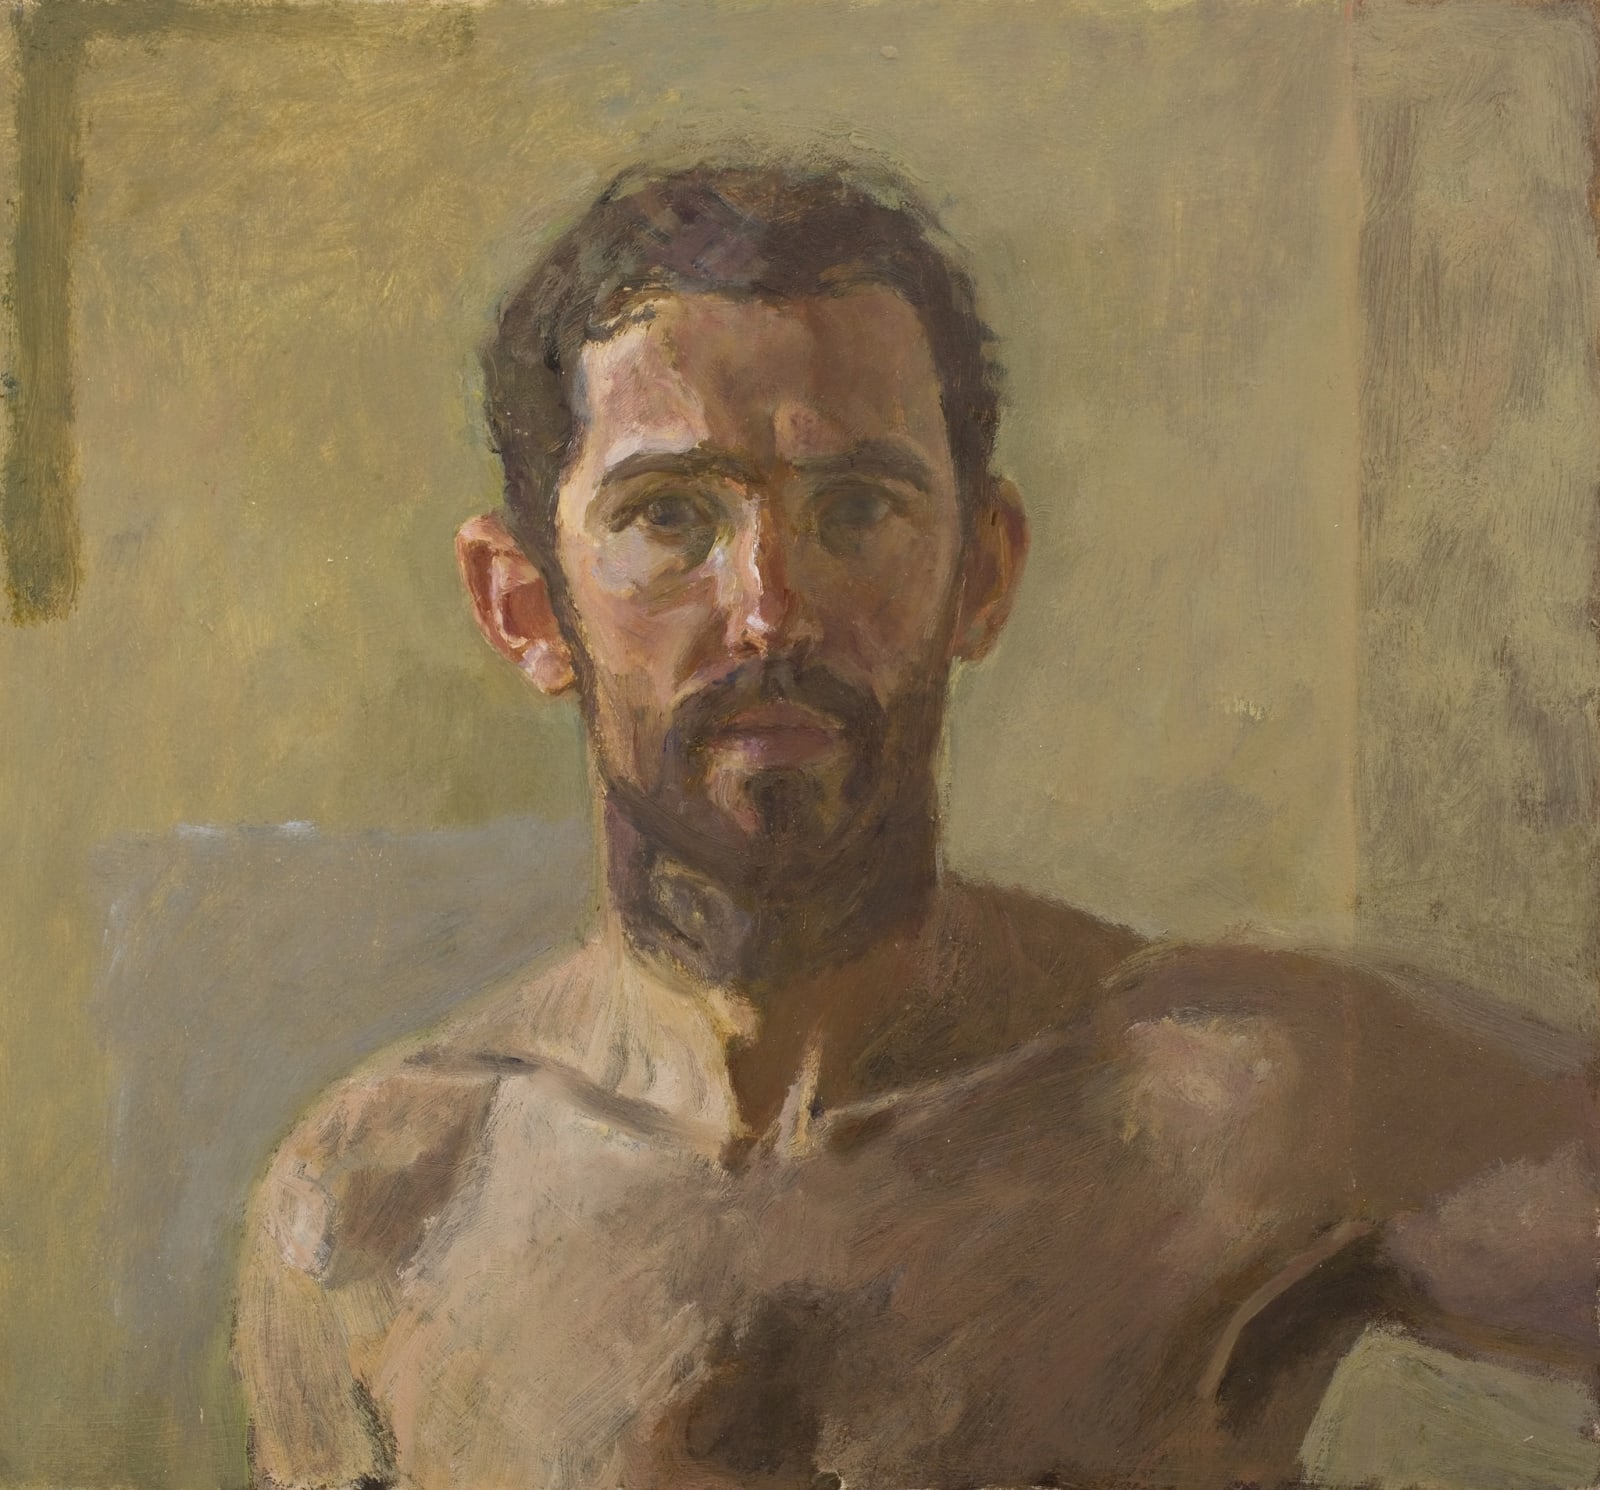 David Caldwell, Self-Portrait